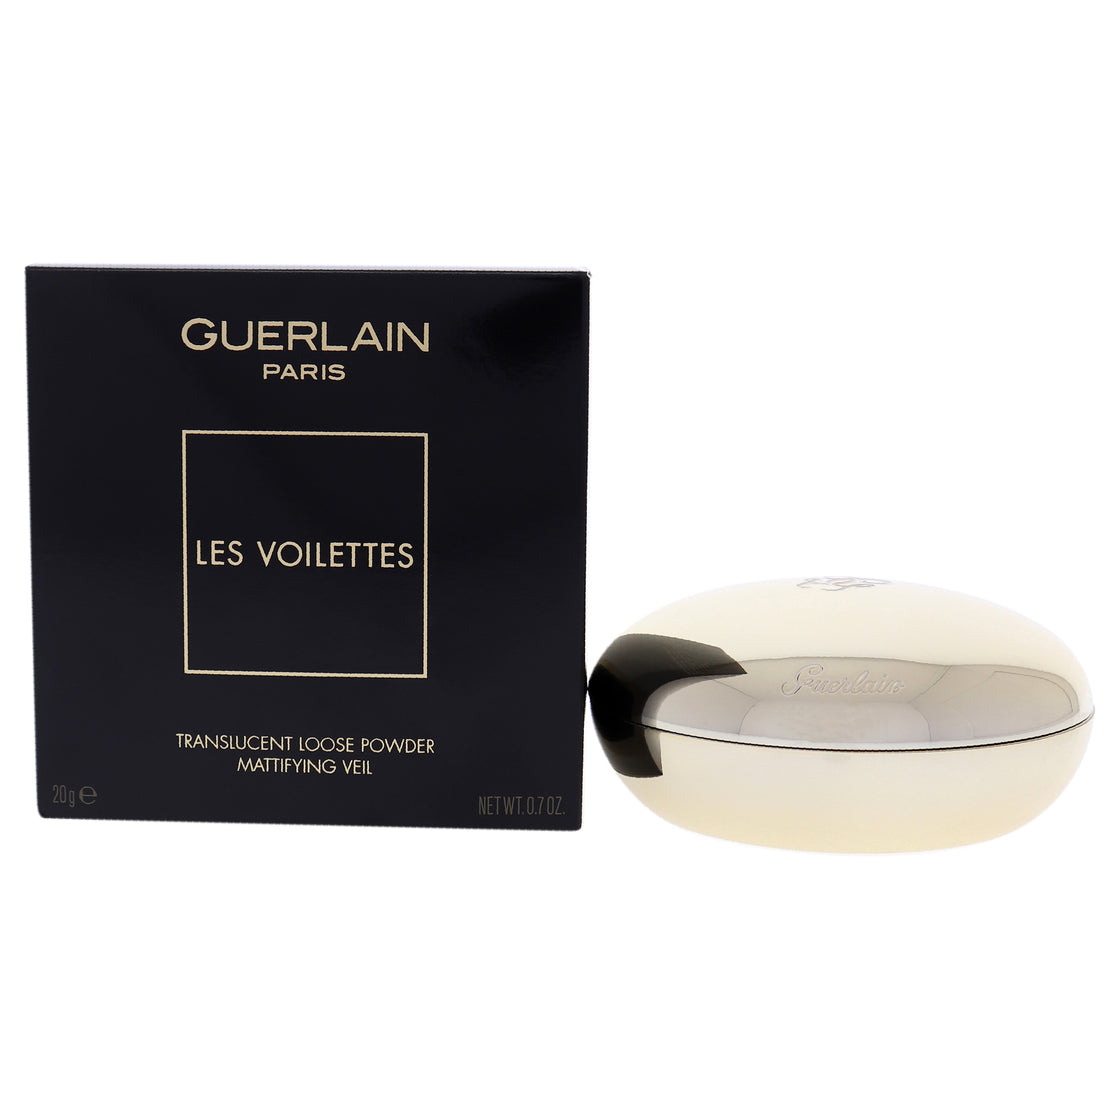 Les Voilettes Translucent Loose Powder Mattifying Veil - 2 Clair by Guerlain for Women - 0.7 oz Powder